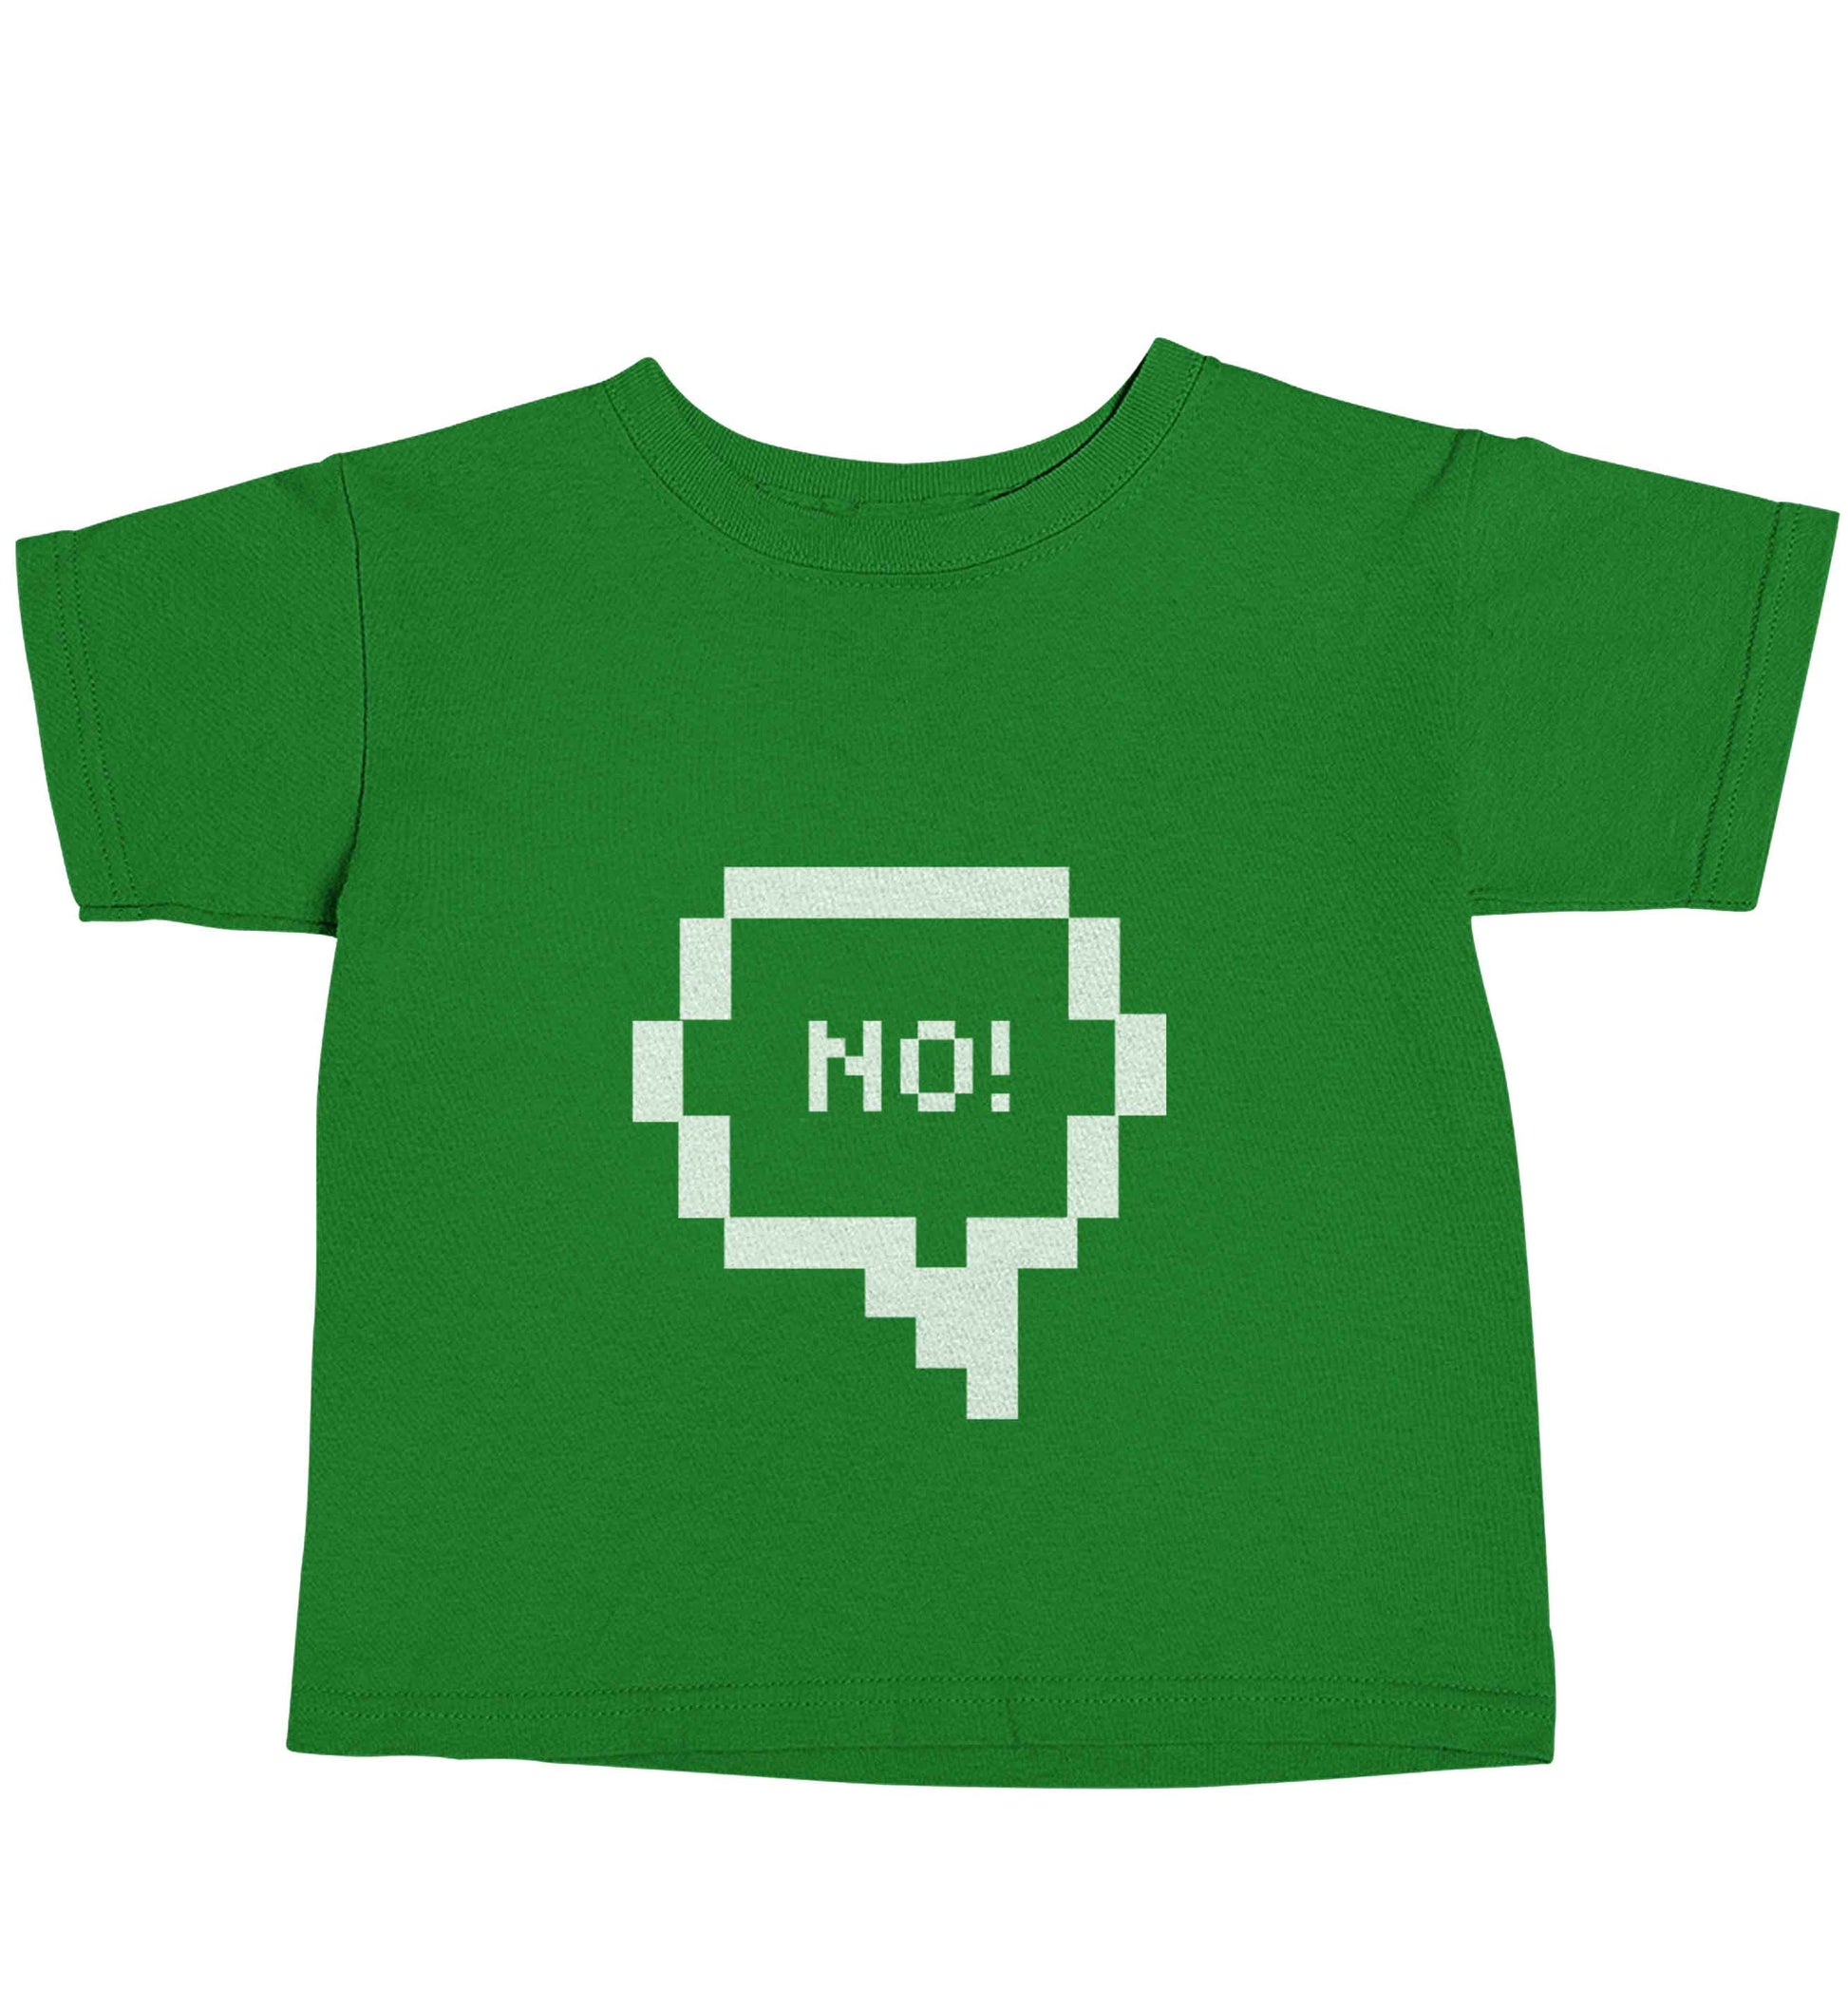 No green baby toddler Tshirt 2 Years